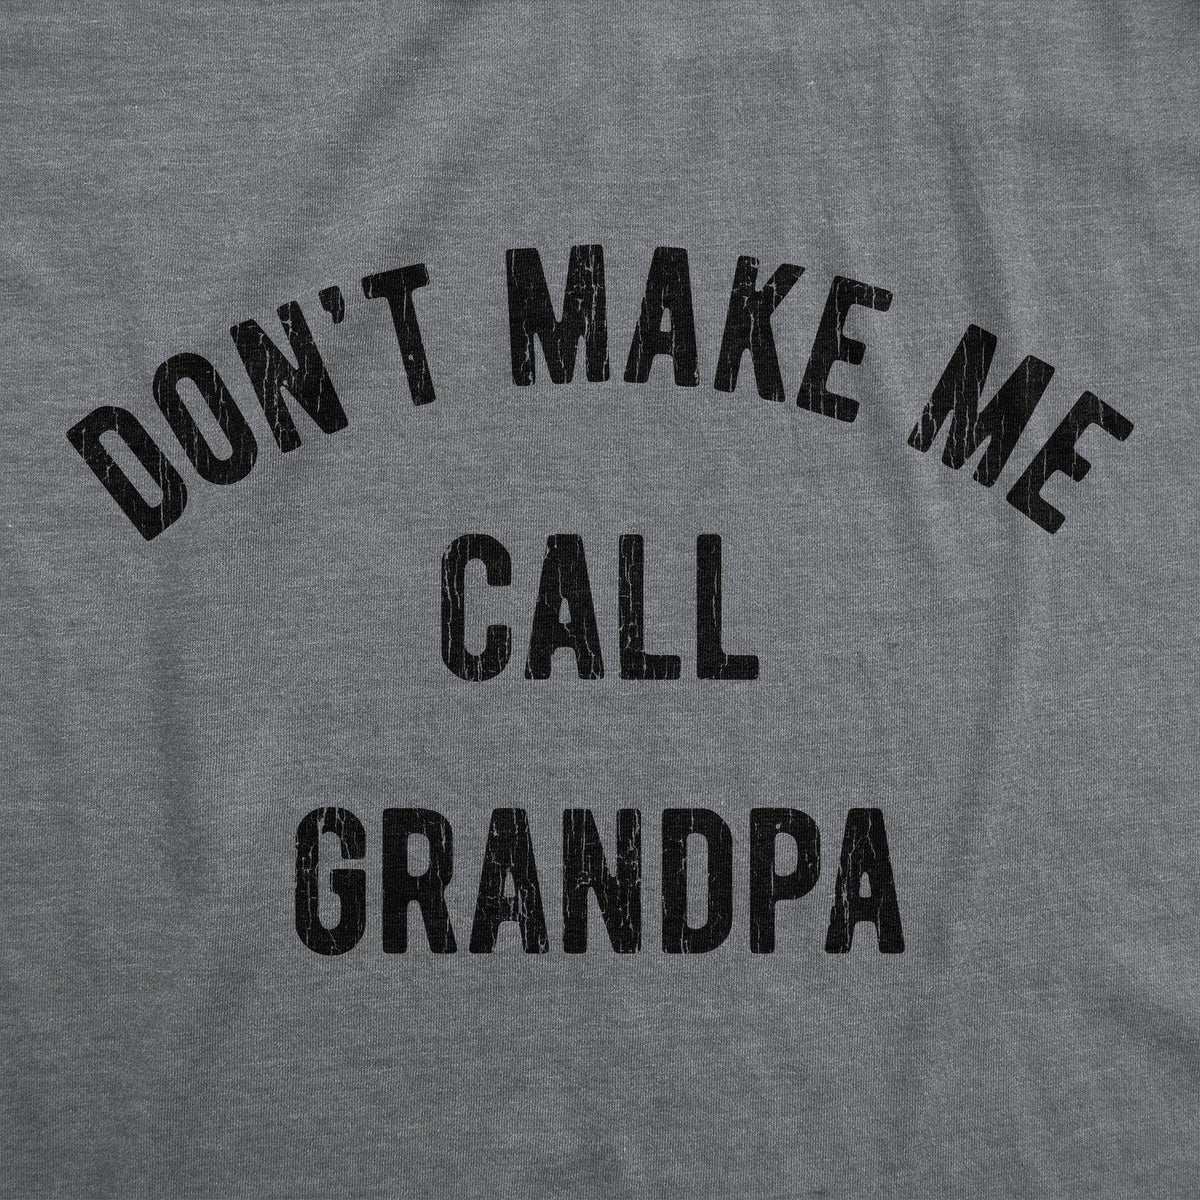 Don&#39;t Make Me Call Grandpa Baby Bodysuit - Crazy Dog T-Shirts